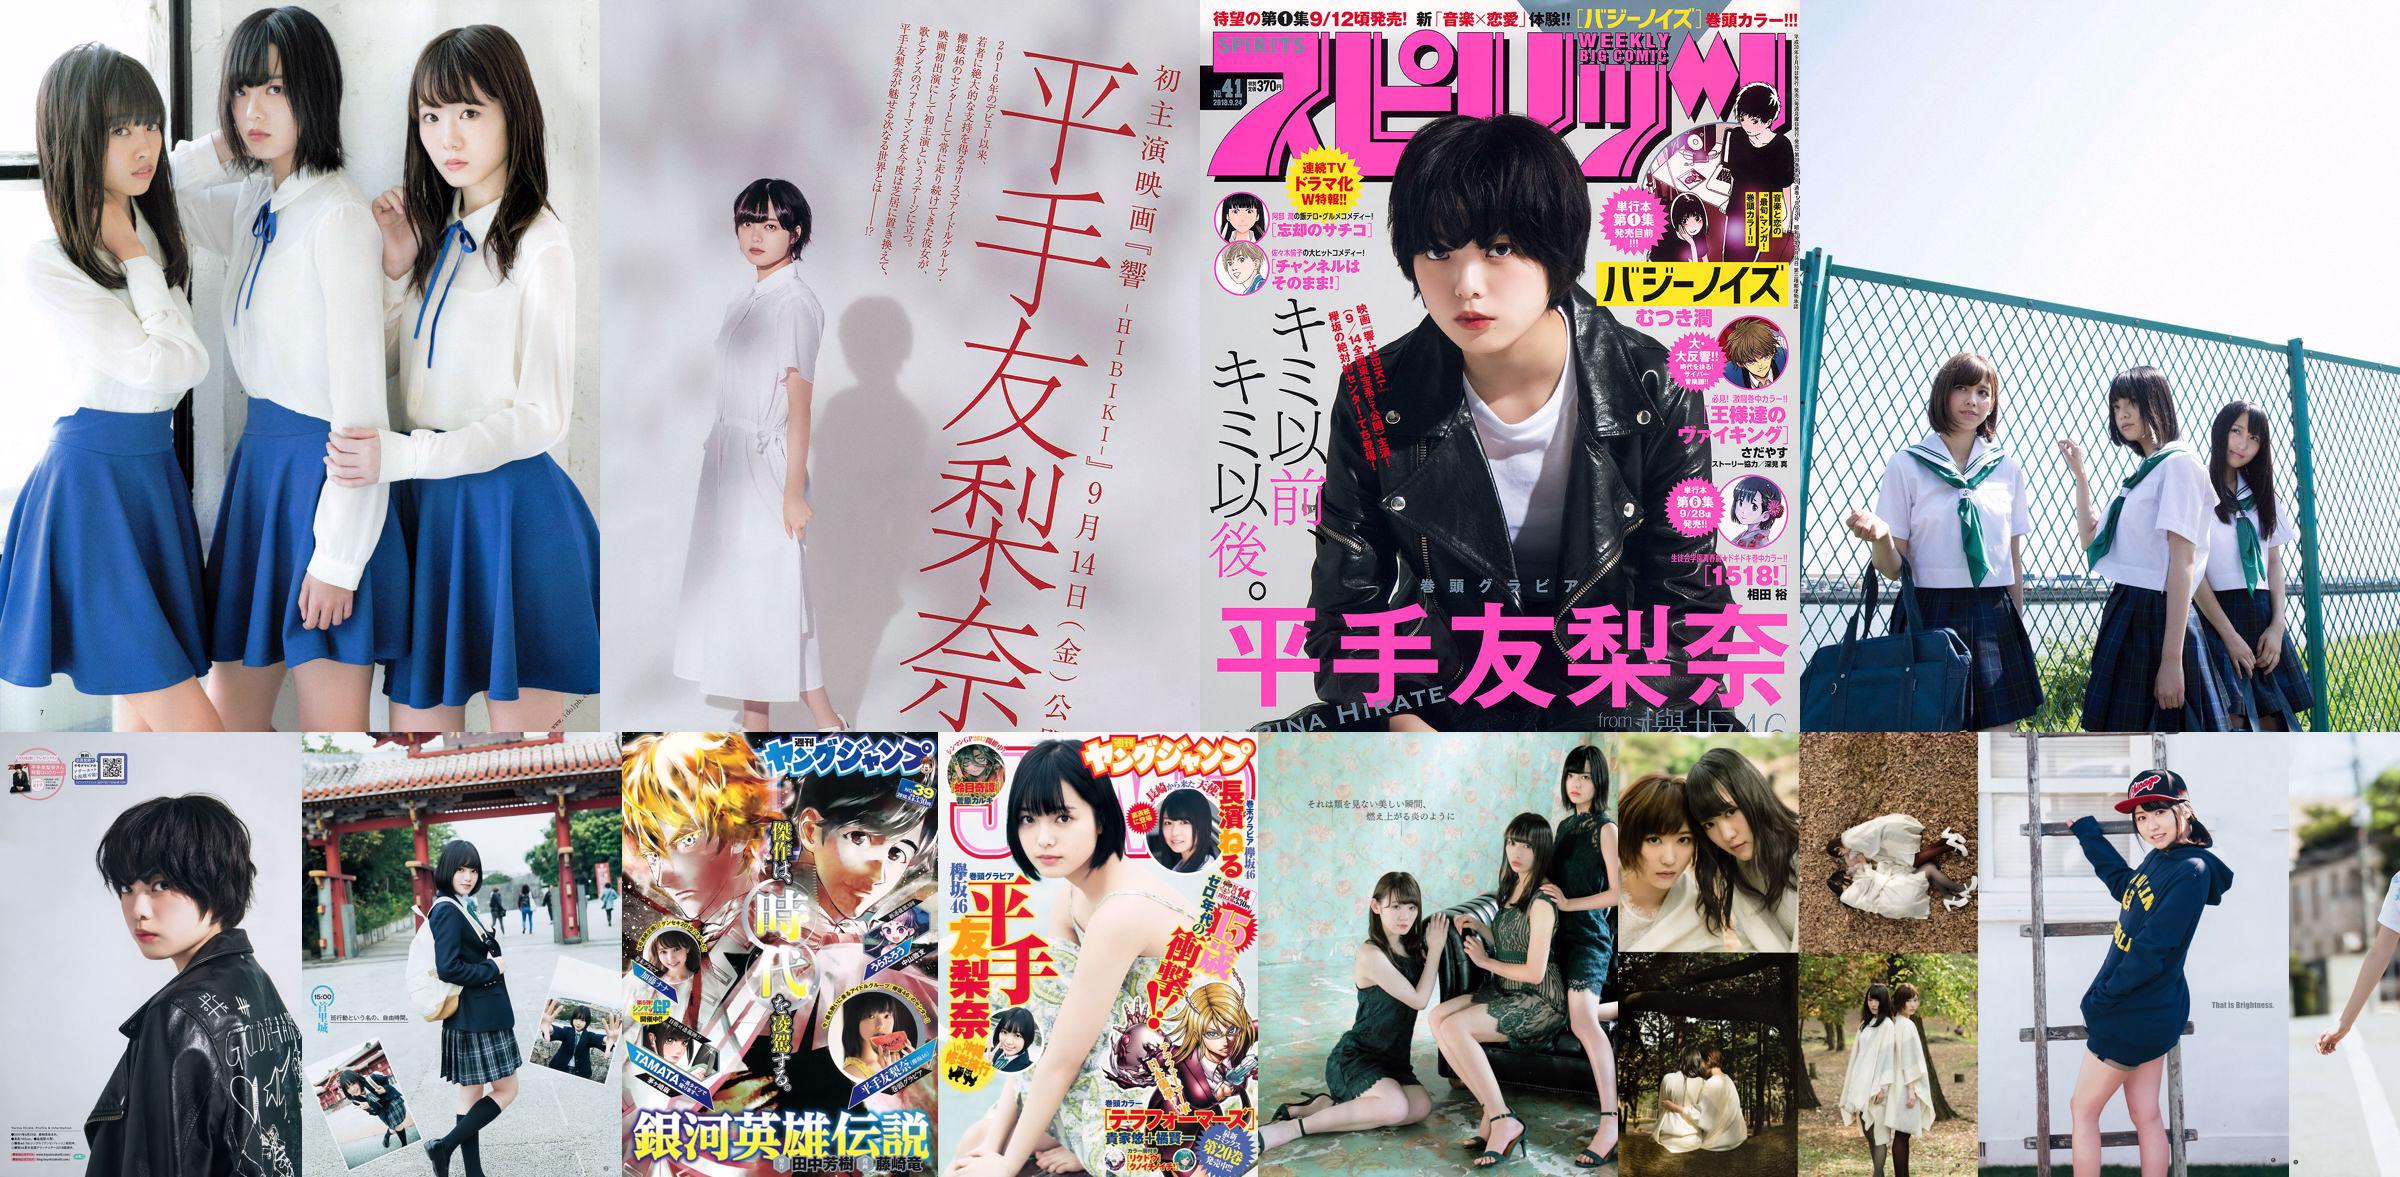 Hirate Yurina Iori Moe Yahagi Moeka [Weekly Young Jump] Tạp chí ảnh số 41 năm 2018 No.6d4da3 Trang 1